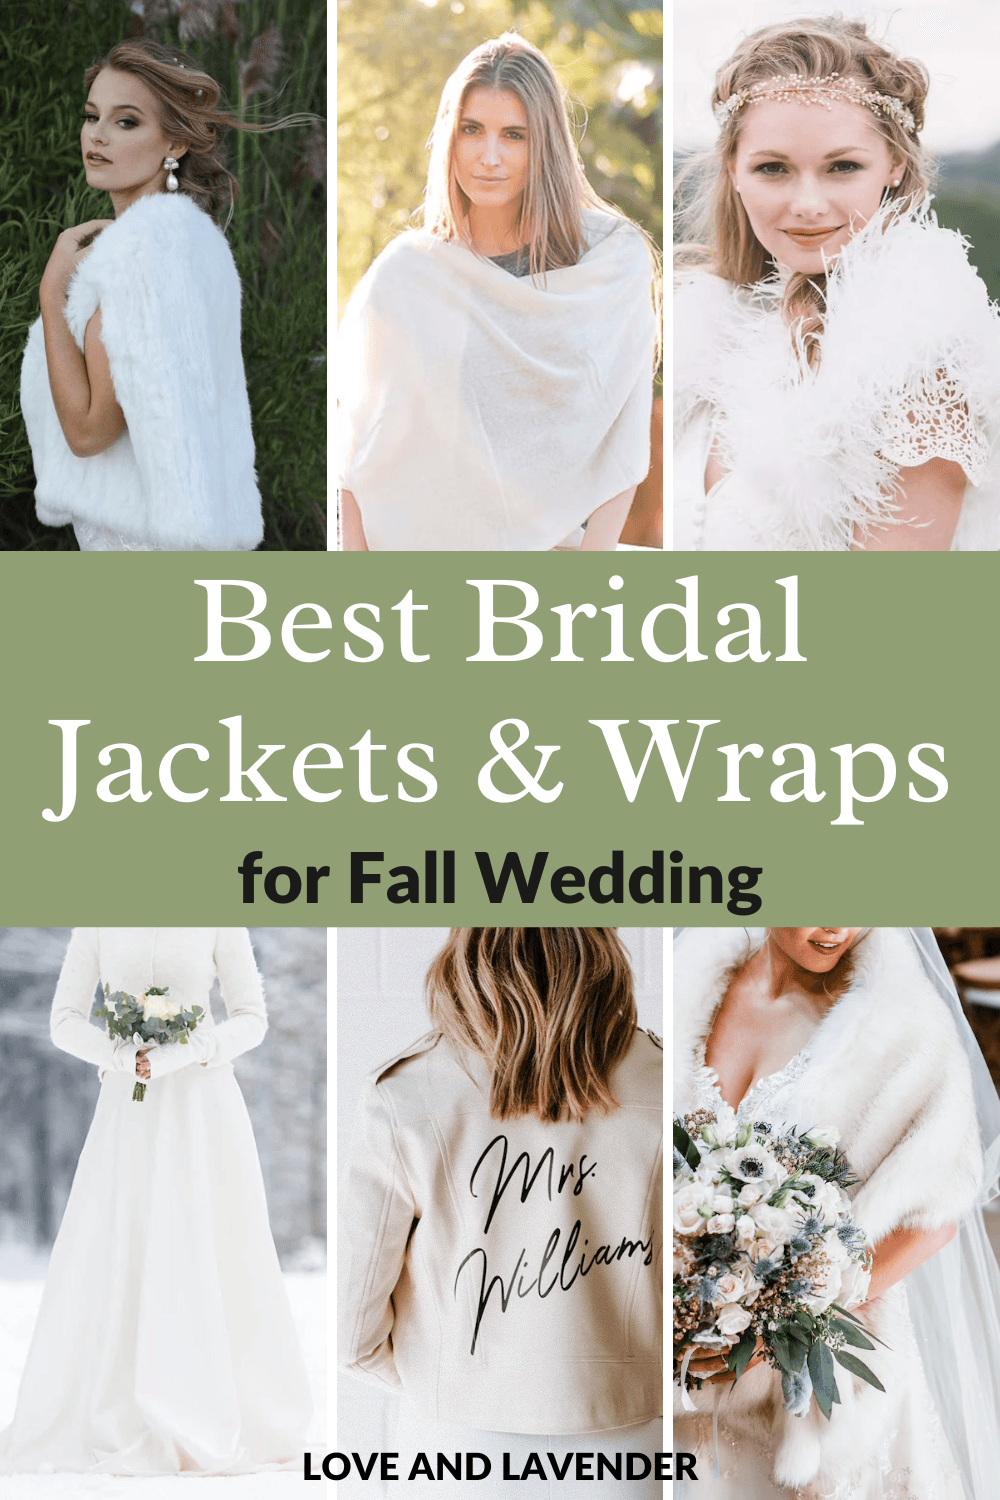 15 Stylish Bridal Jackets & Wraps to Match a Fall Wedding Gown